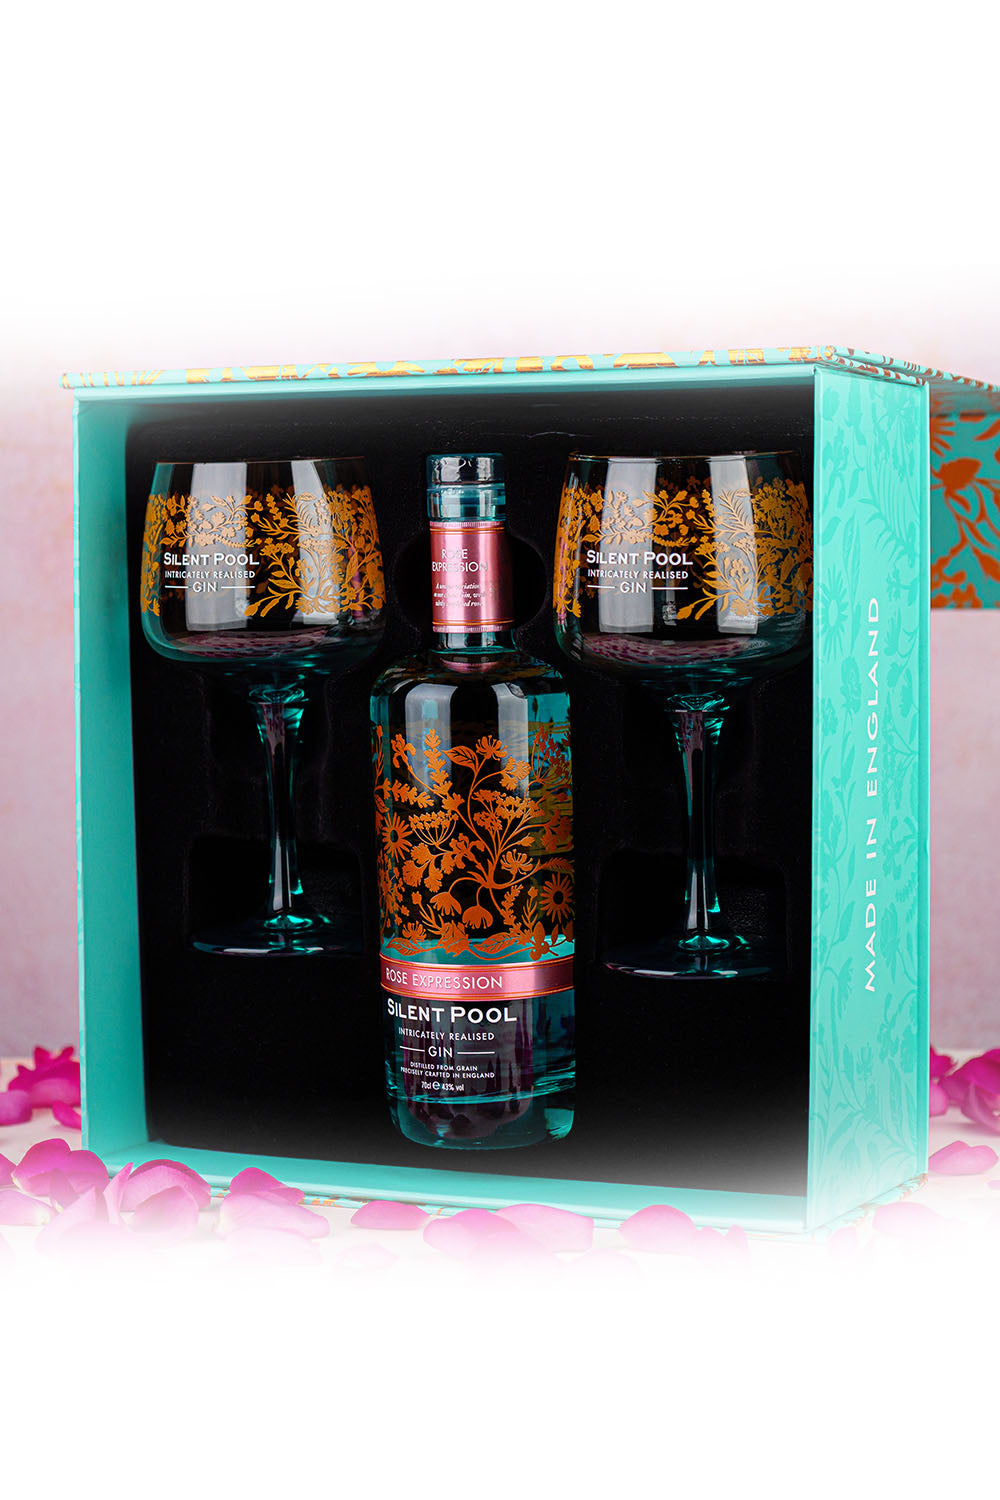 Silent Pool Gin Rose Expression 2x Copa Glasses Presentation Gift Set